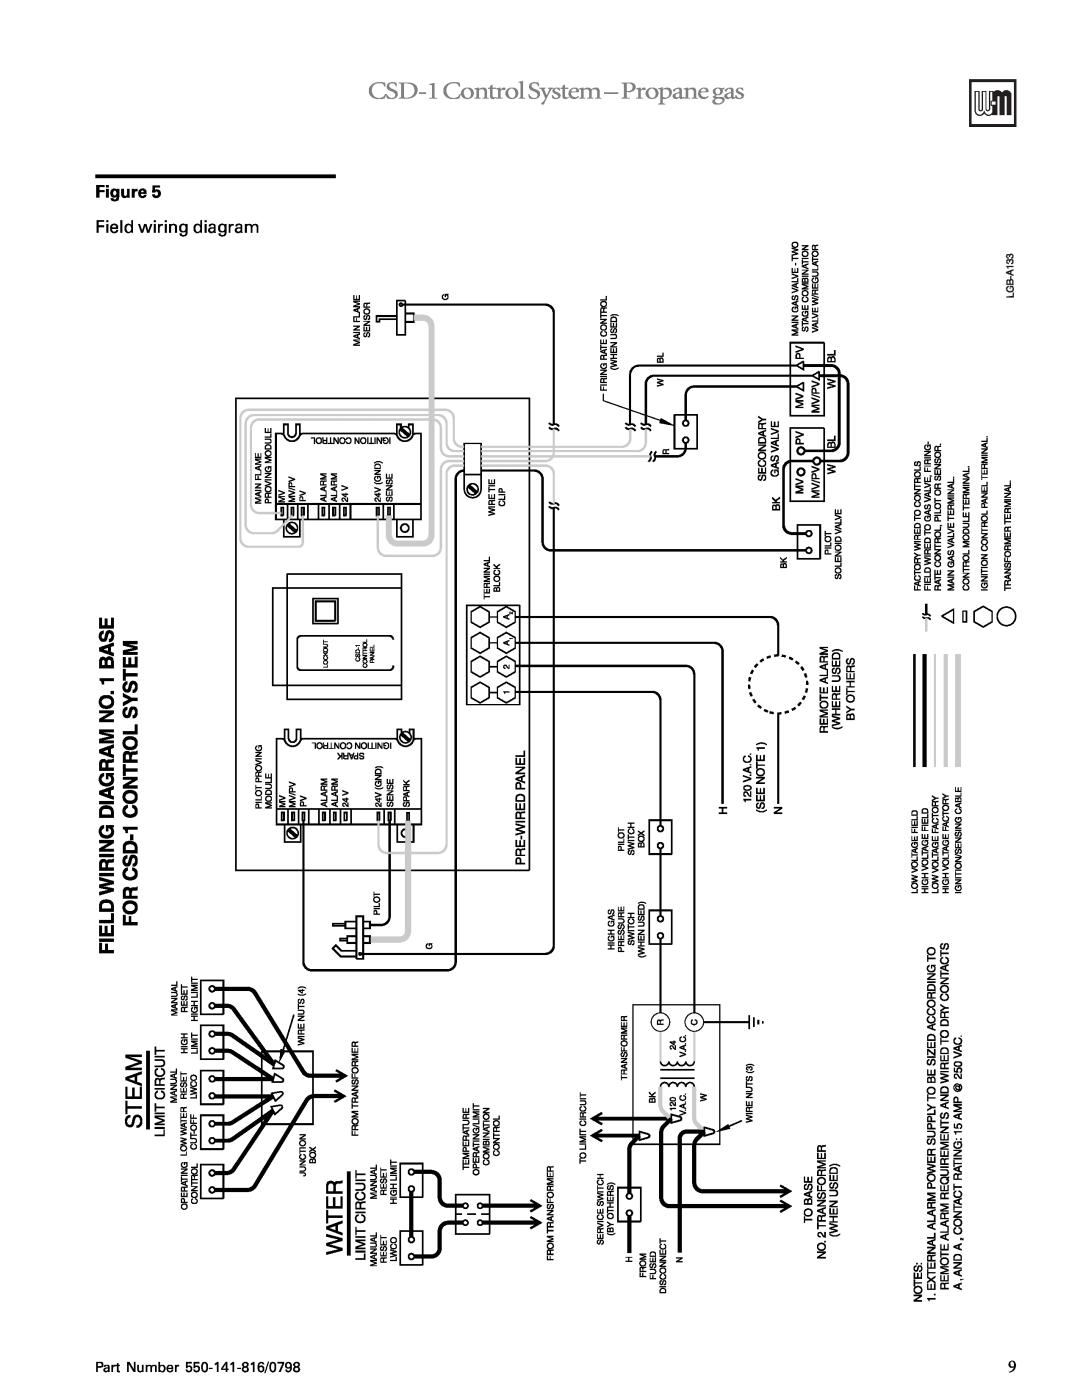 Weil-McLain 6-20 Series Field wiring diagram, CSD-1ControlSystem-Propanegas, Part Number 550-141-816/0798 